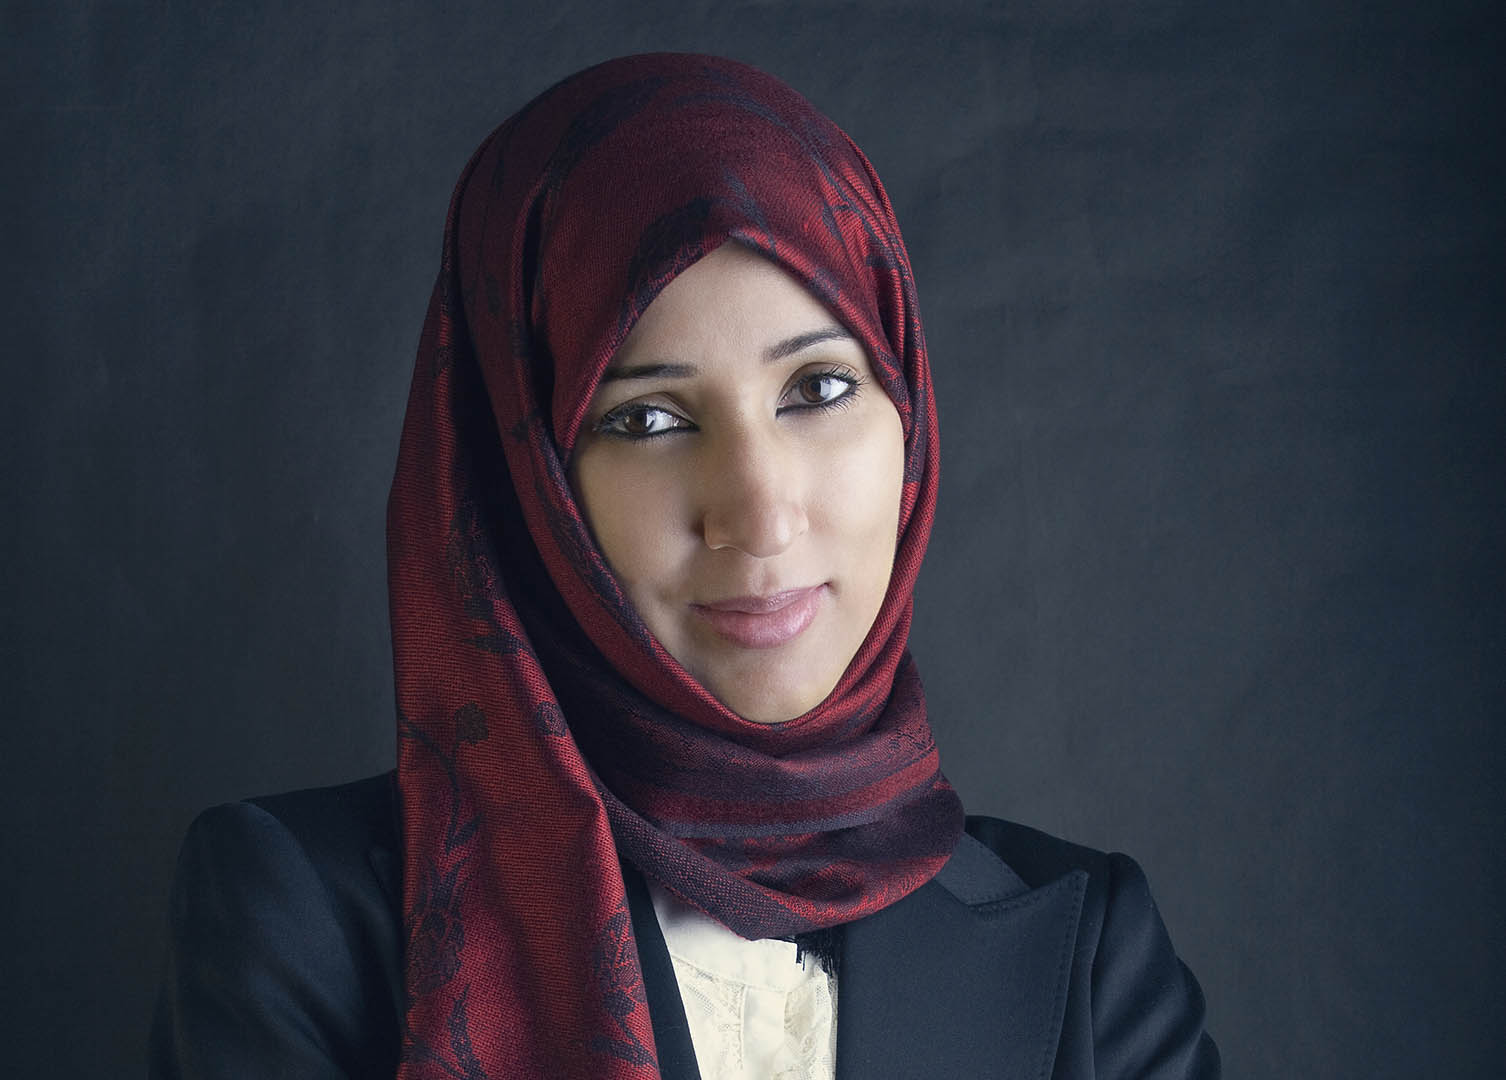 Saudi women's rights advocate Manal Alsharif.